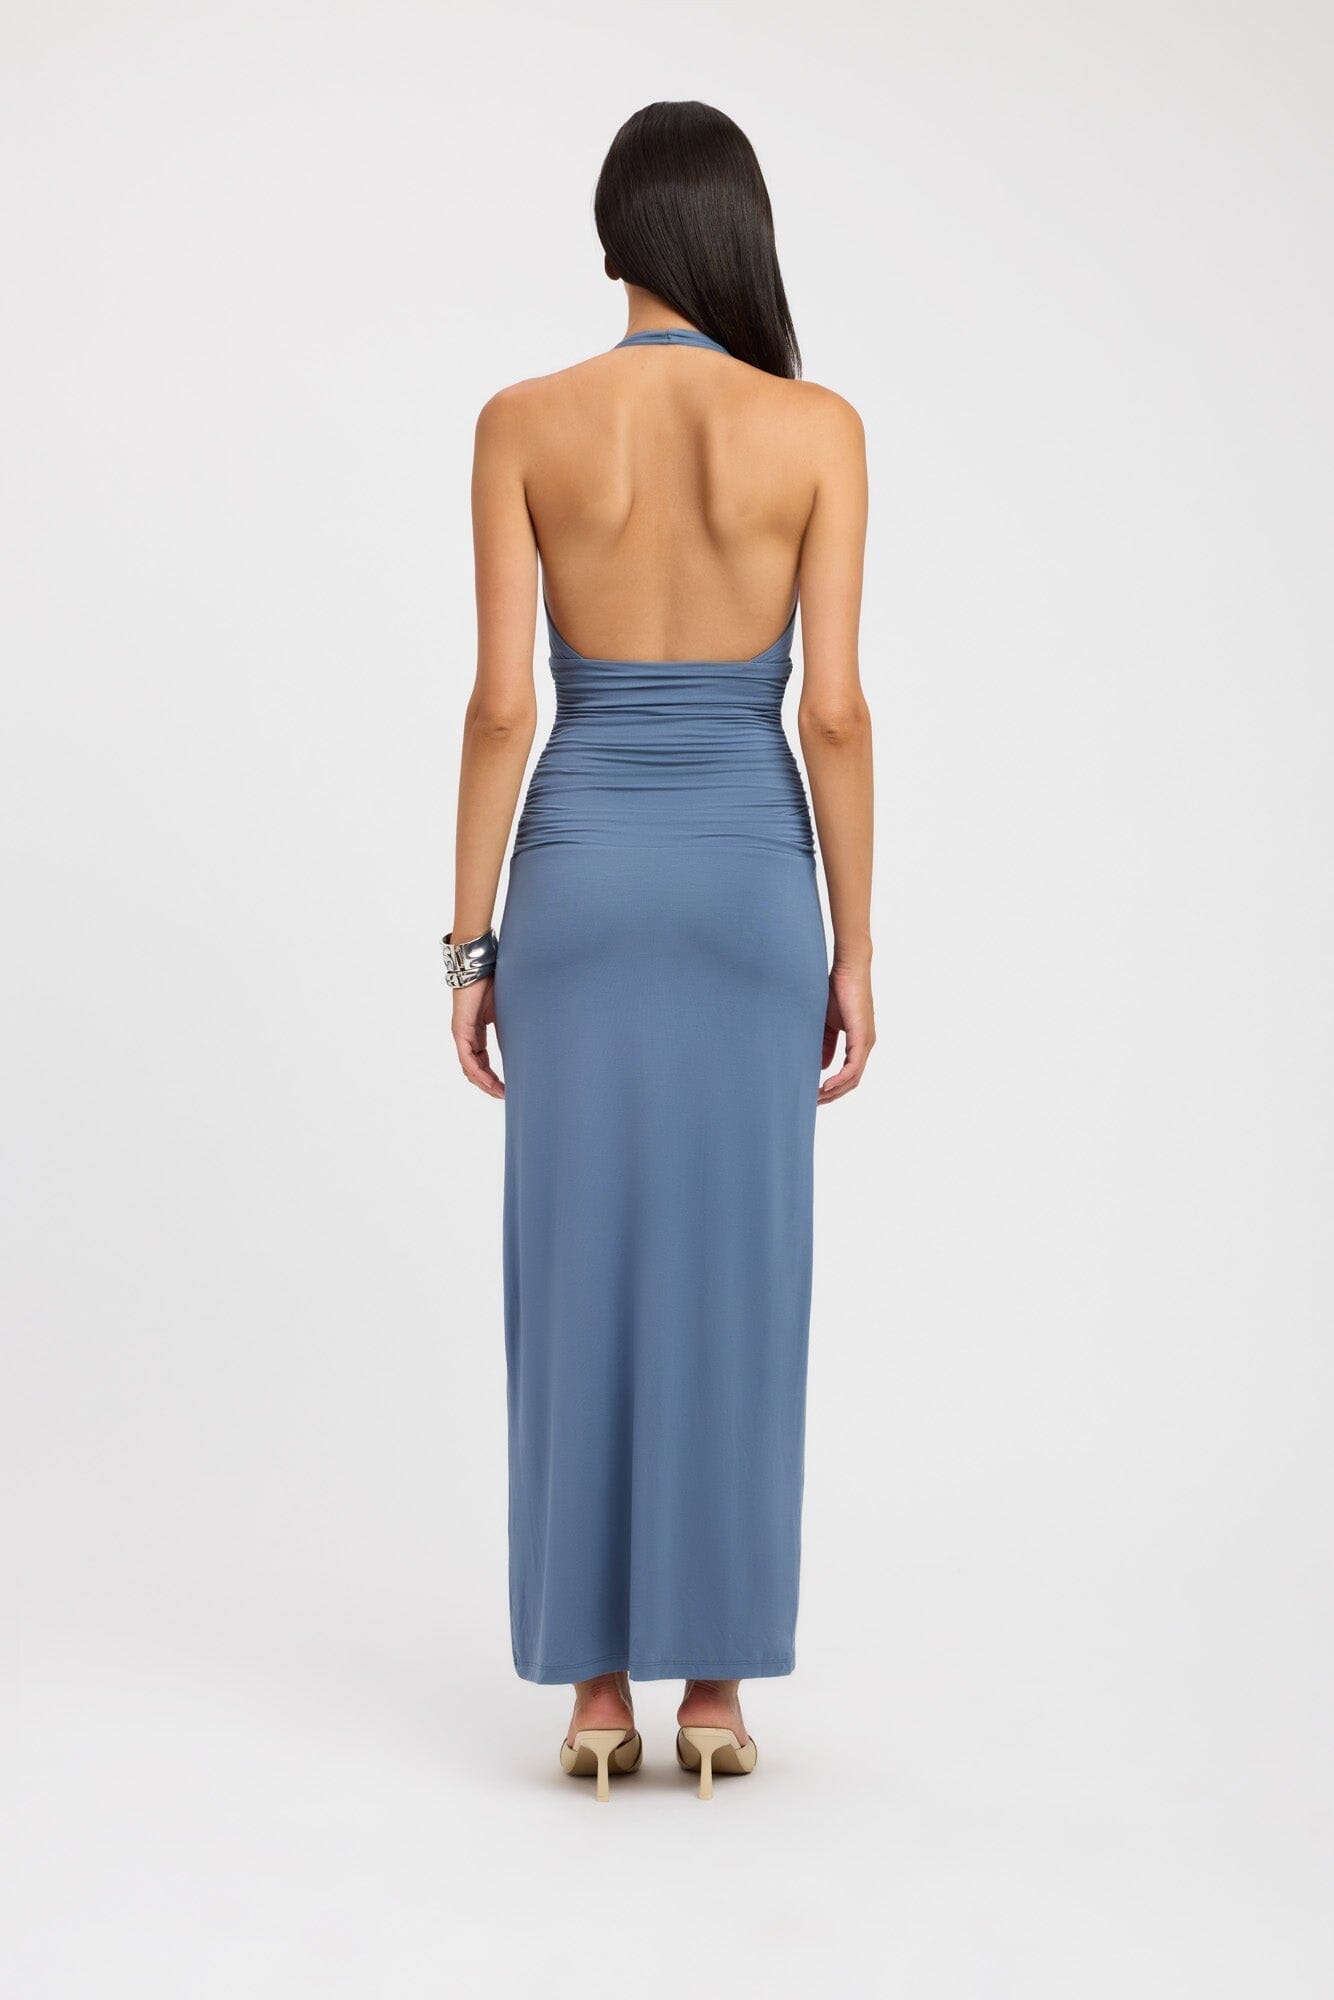 Brooklyn Dress - Blue Mist Clothing Kookai 